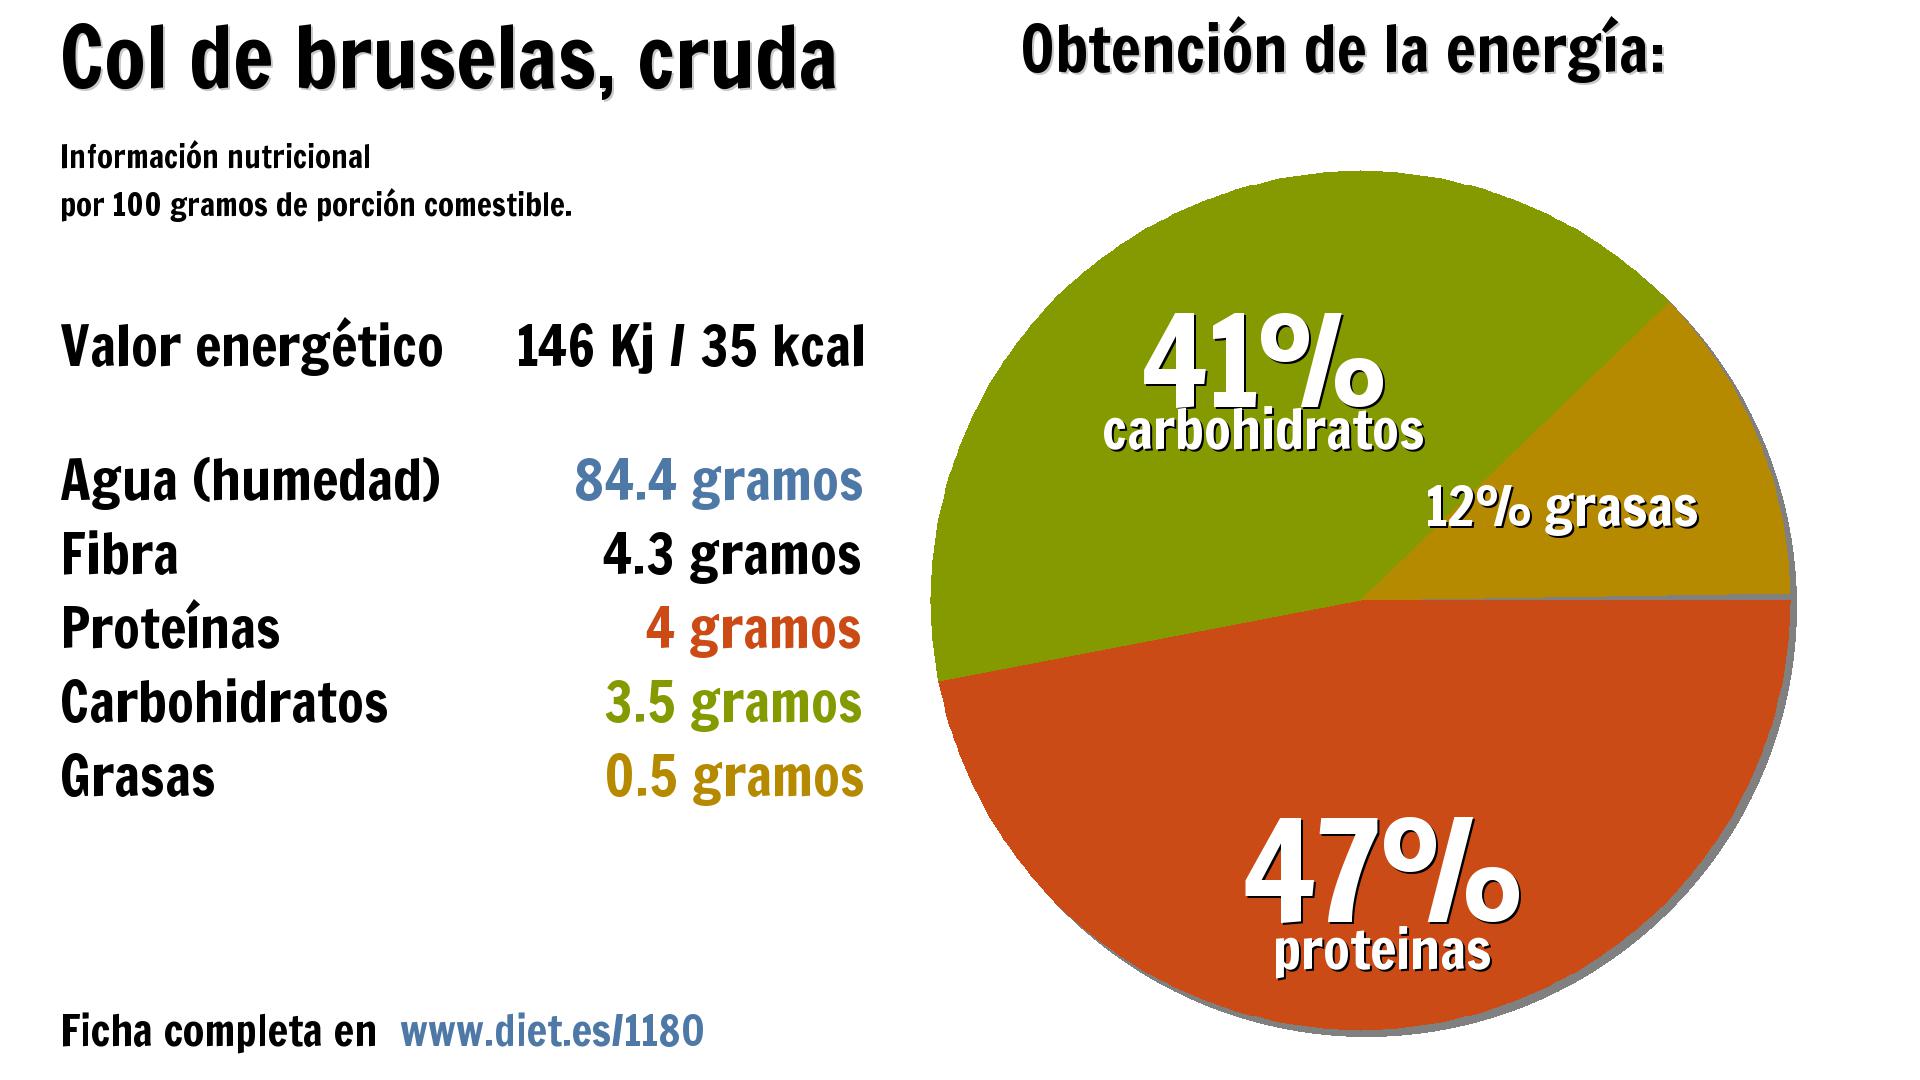 Col de bruselas, cruda: energía 146 Kj, agua 84 g., fibra 4 g., proteínas 4 g., carbohidratos 4 g. y grasas 1 g.